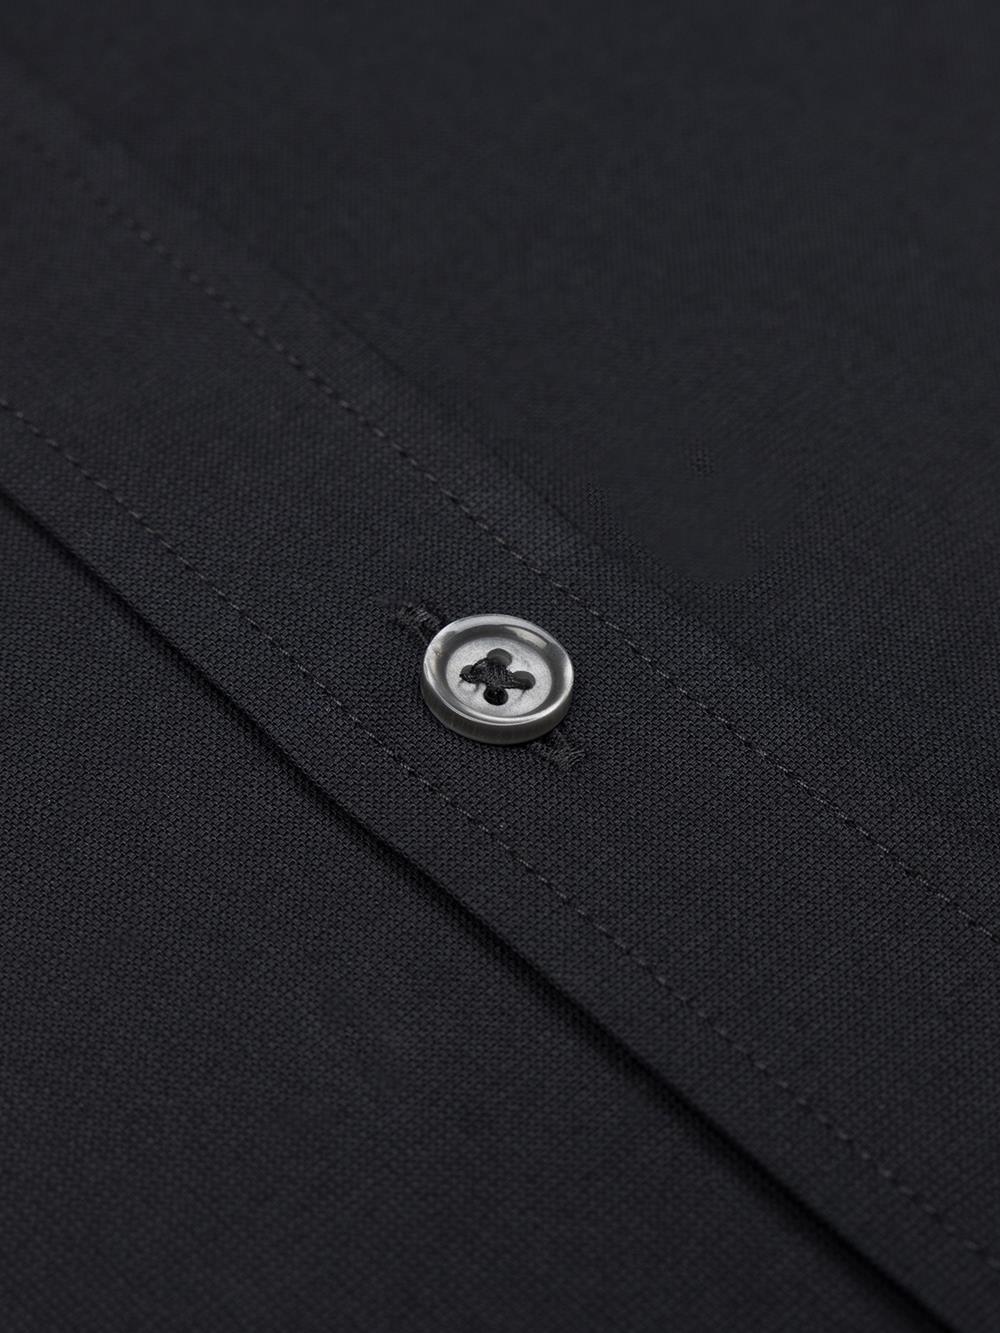 Gleeson black slim fit shirt - Extra Long Sleeves